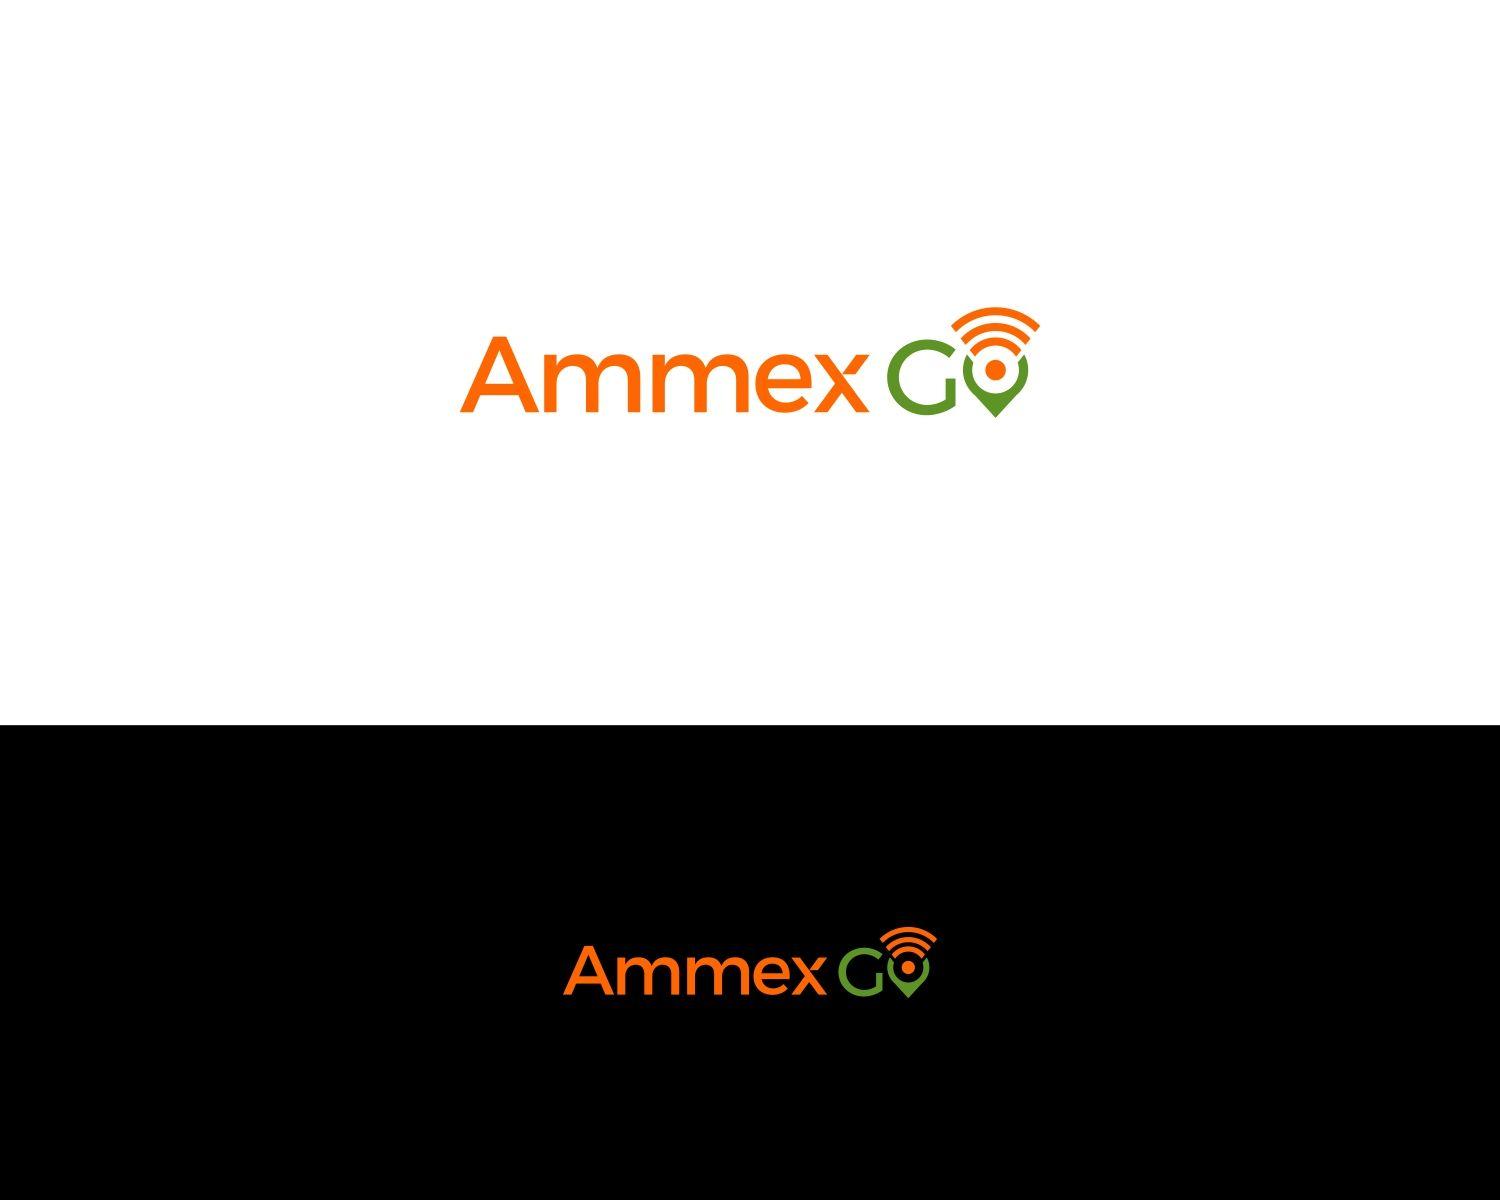 Ammex Logo - Logo Design #117 | 'Ammex Go' design project | DesignContest ®